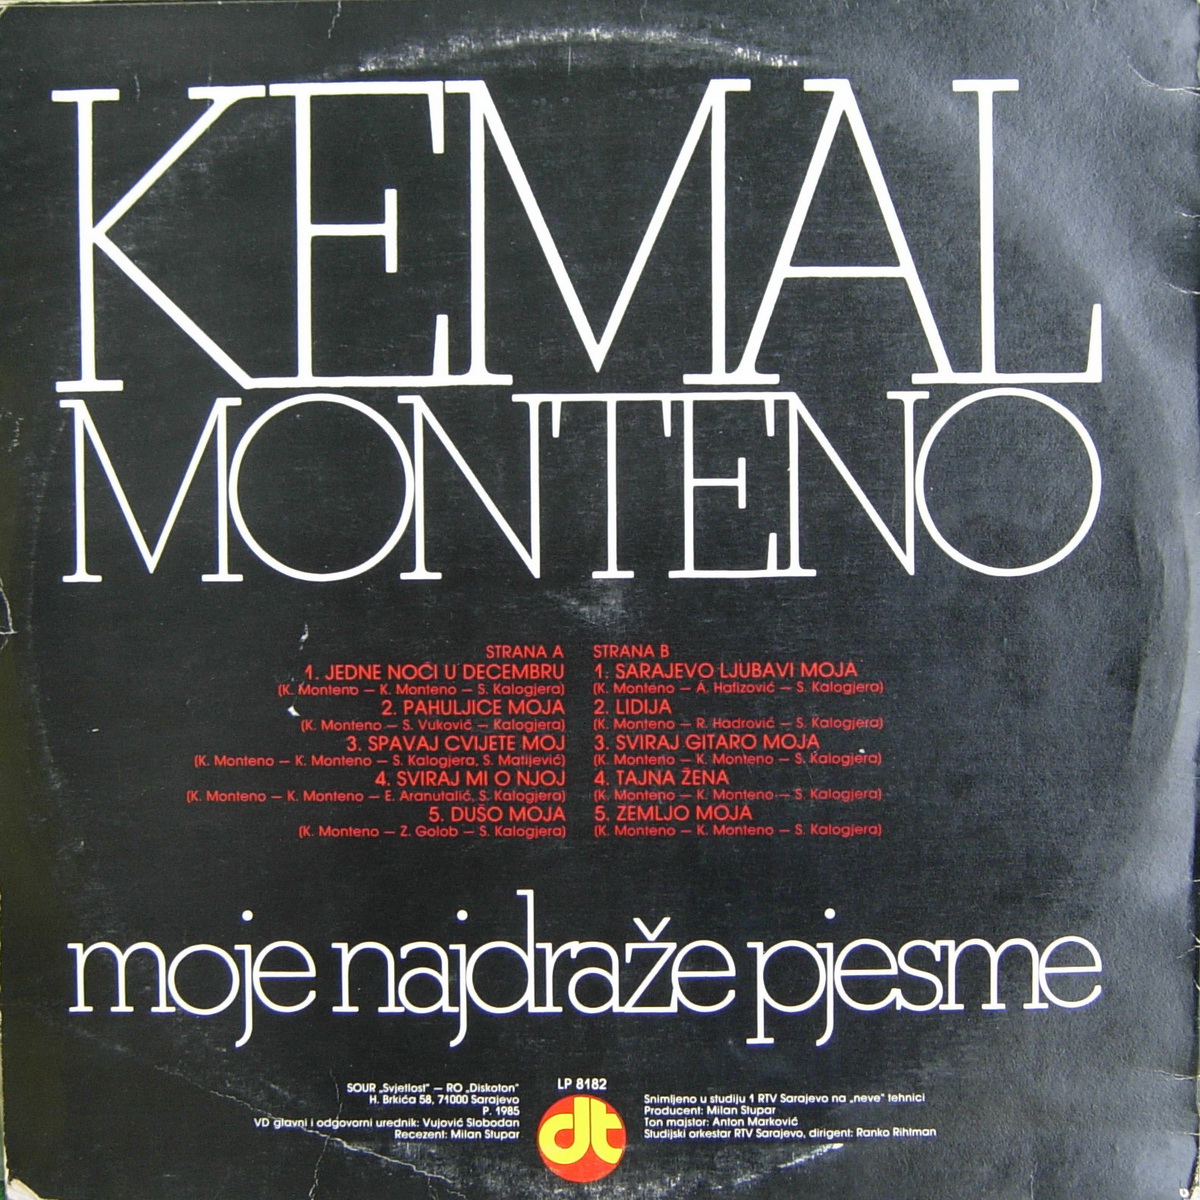 Kemal Monteno 1985 Moje najdraze pjesme b